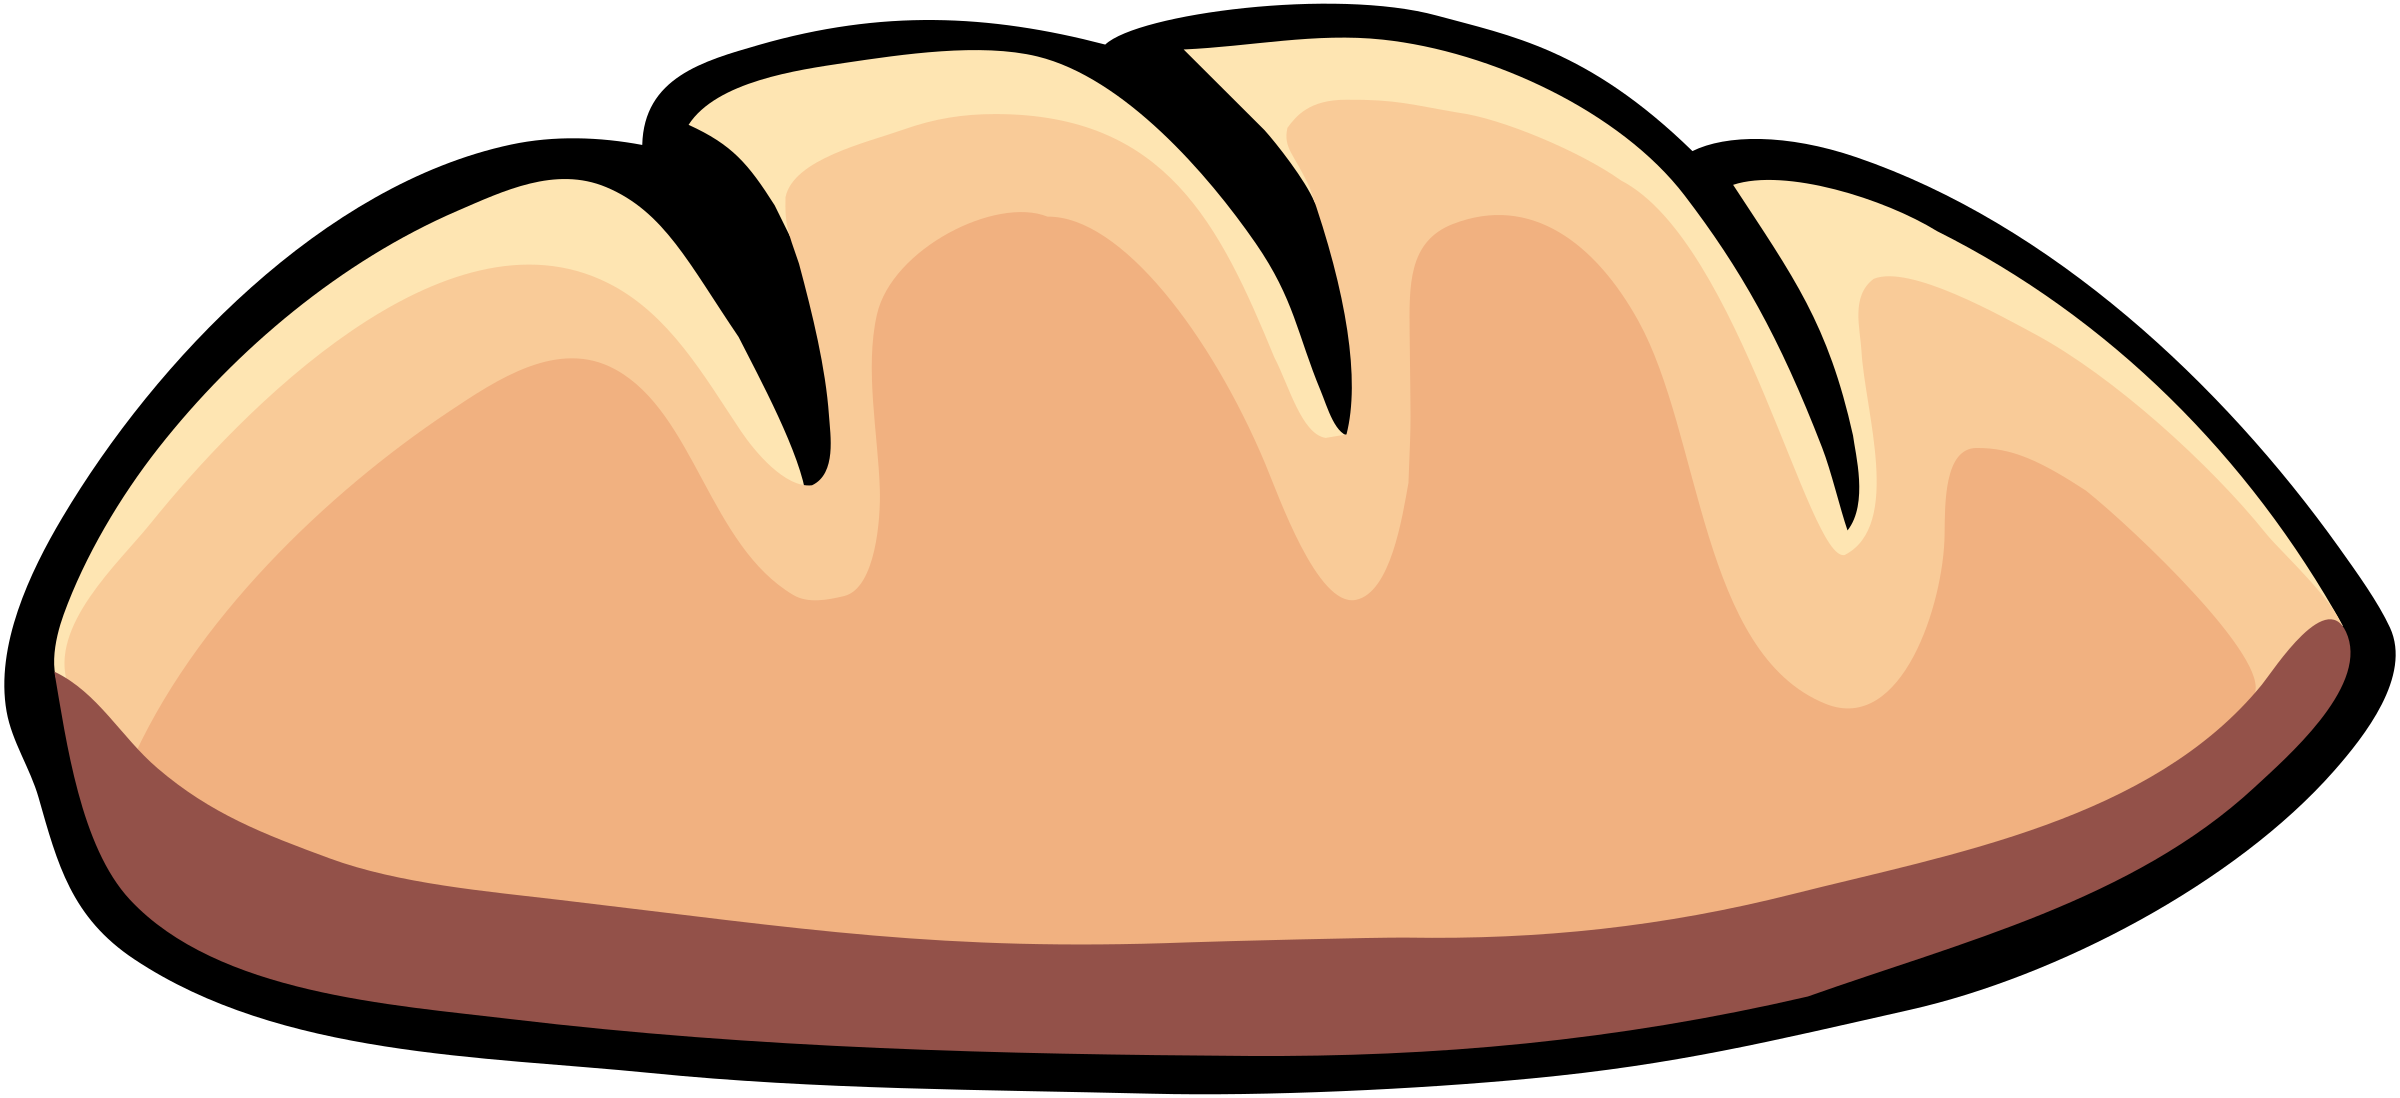 clipart of bread - photo #6